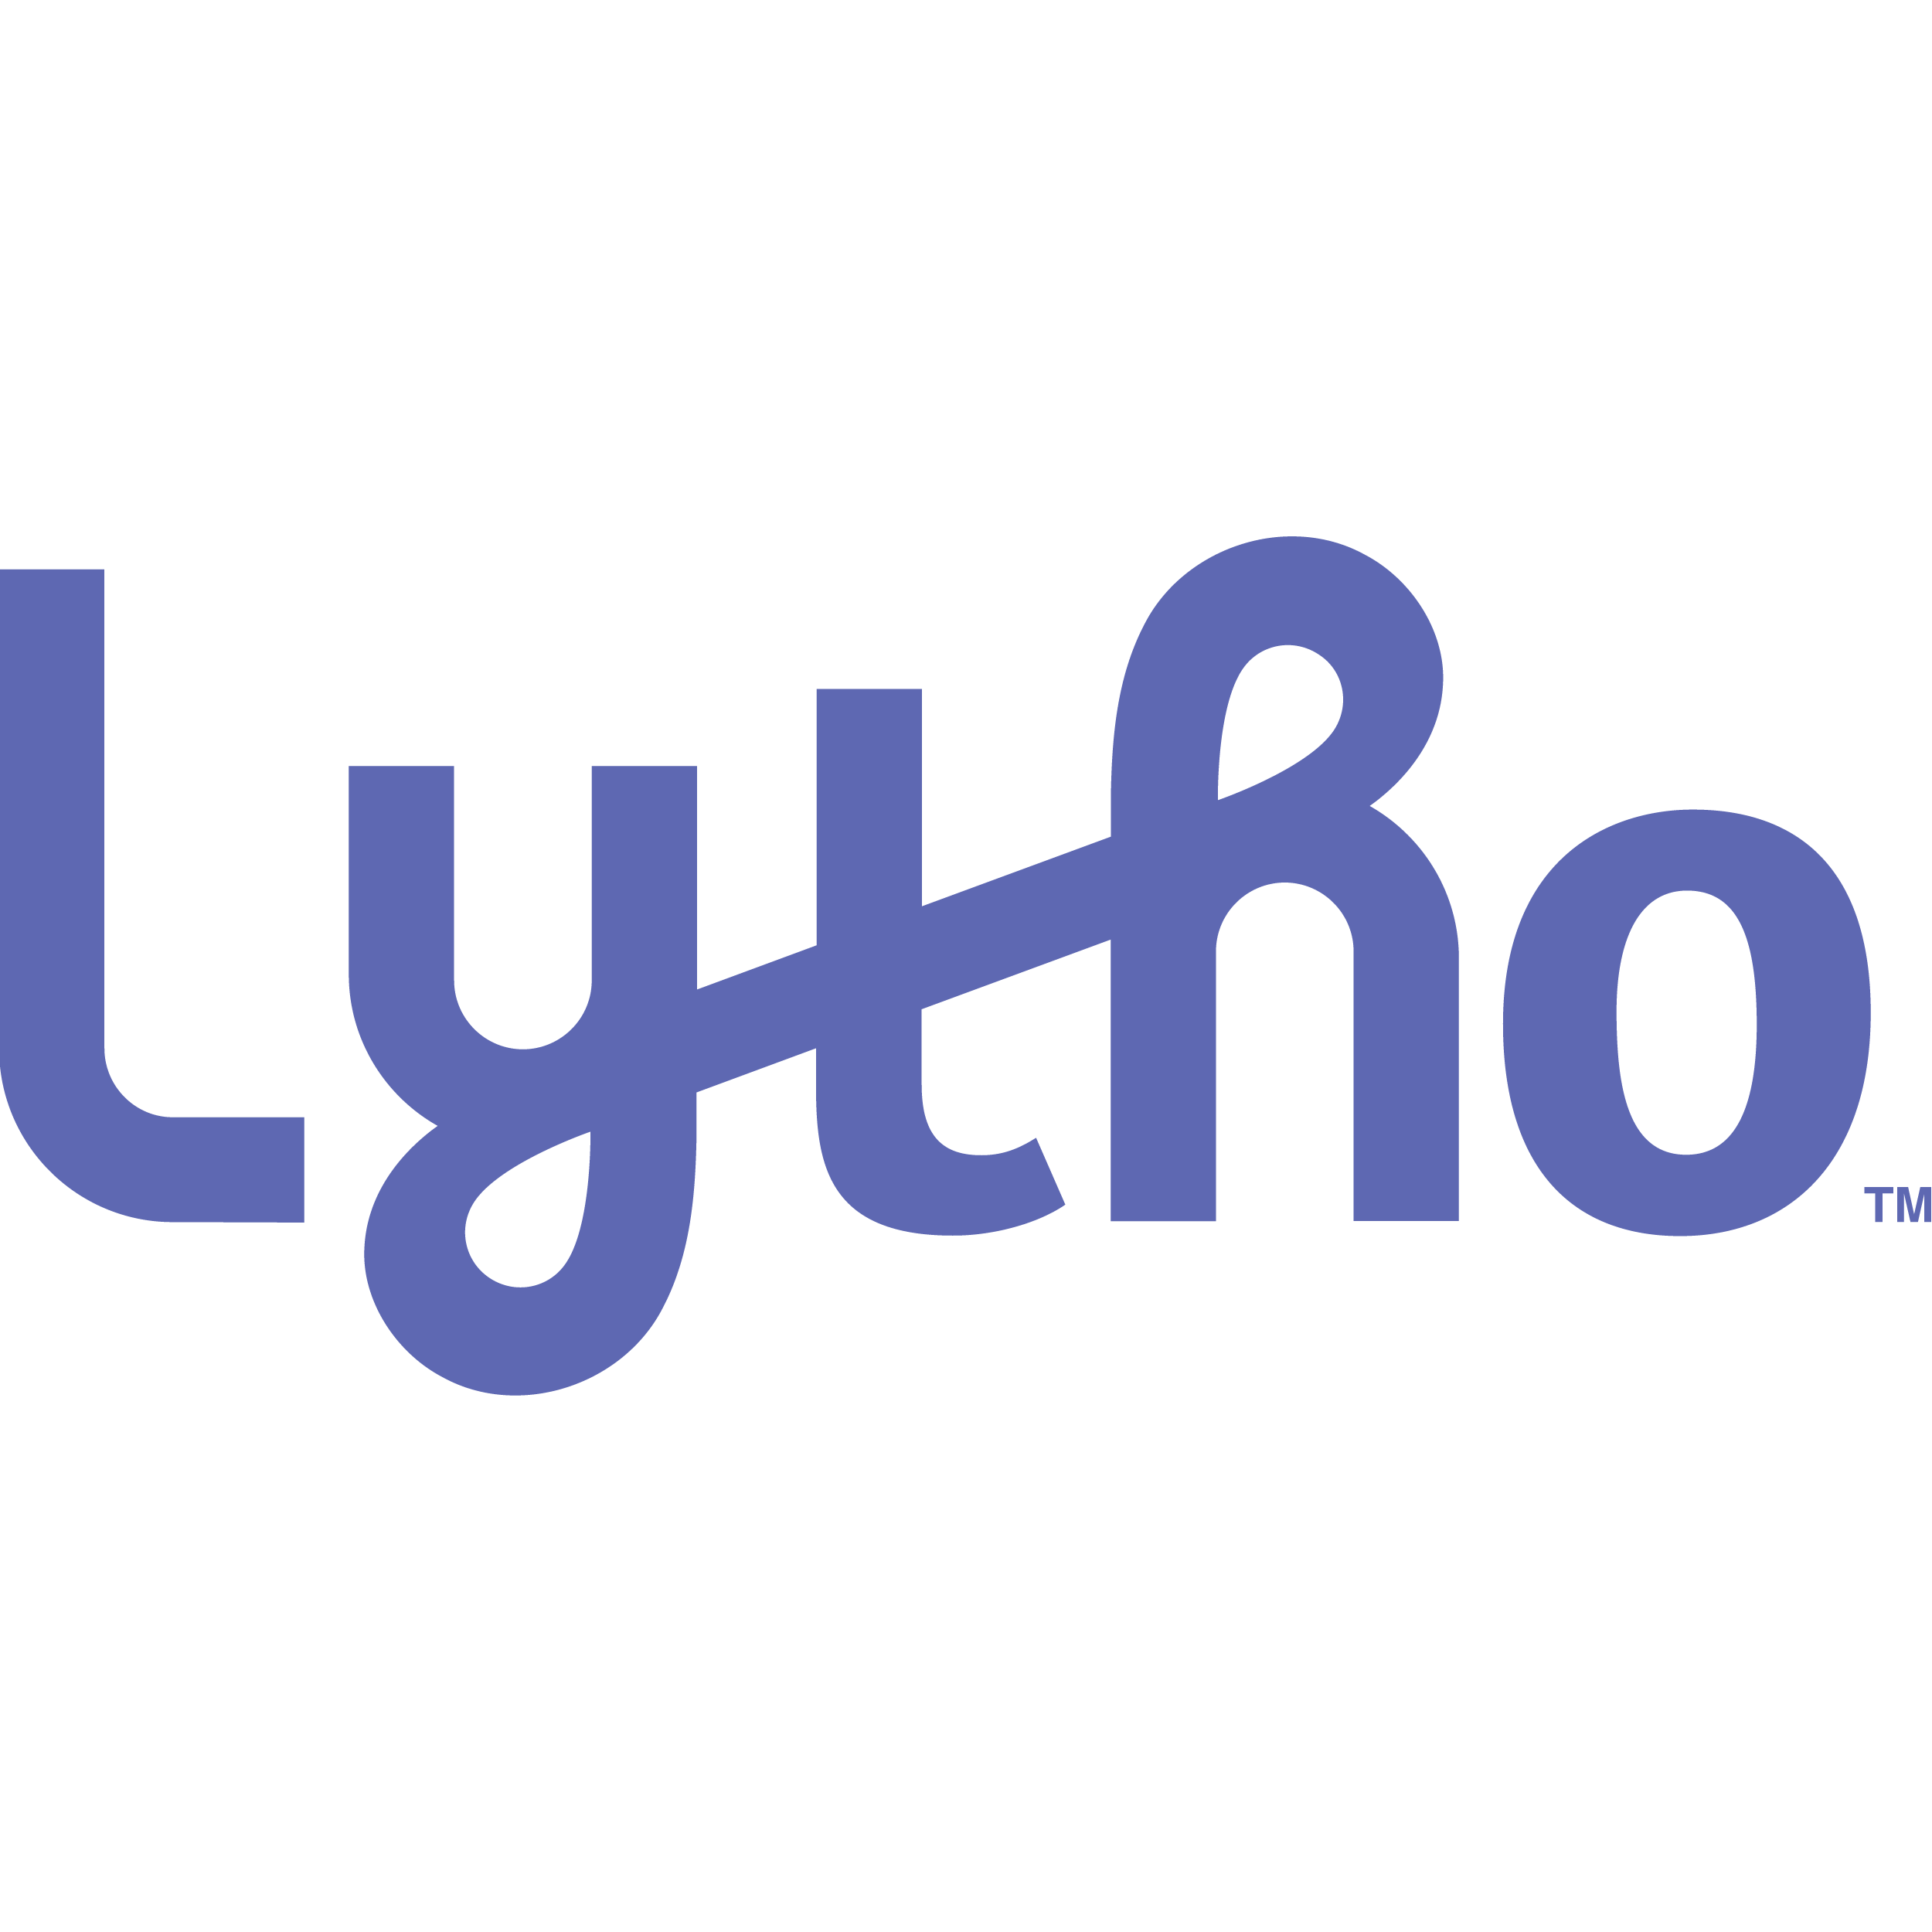 Lytho-Primary-RGB.png